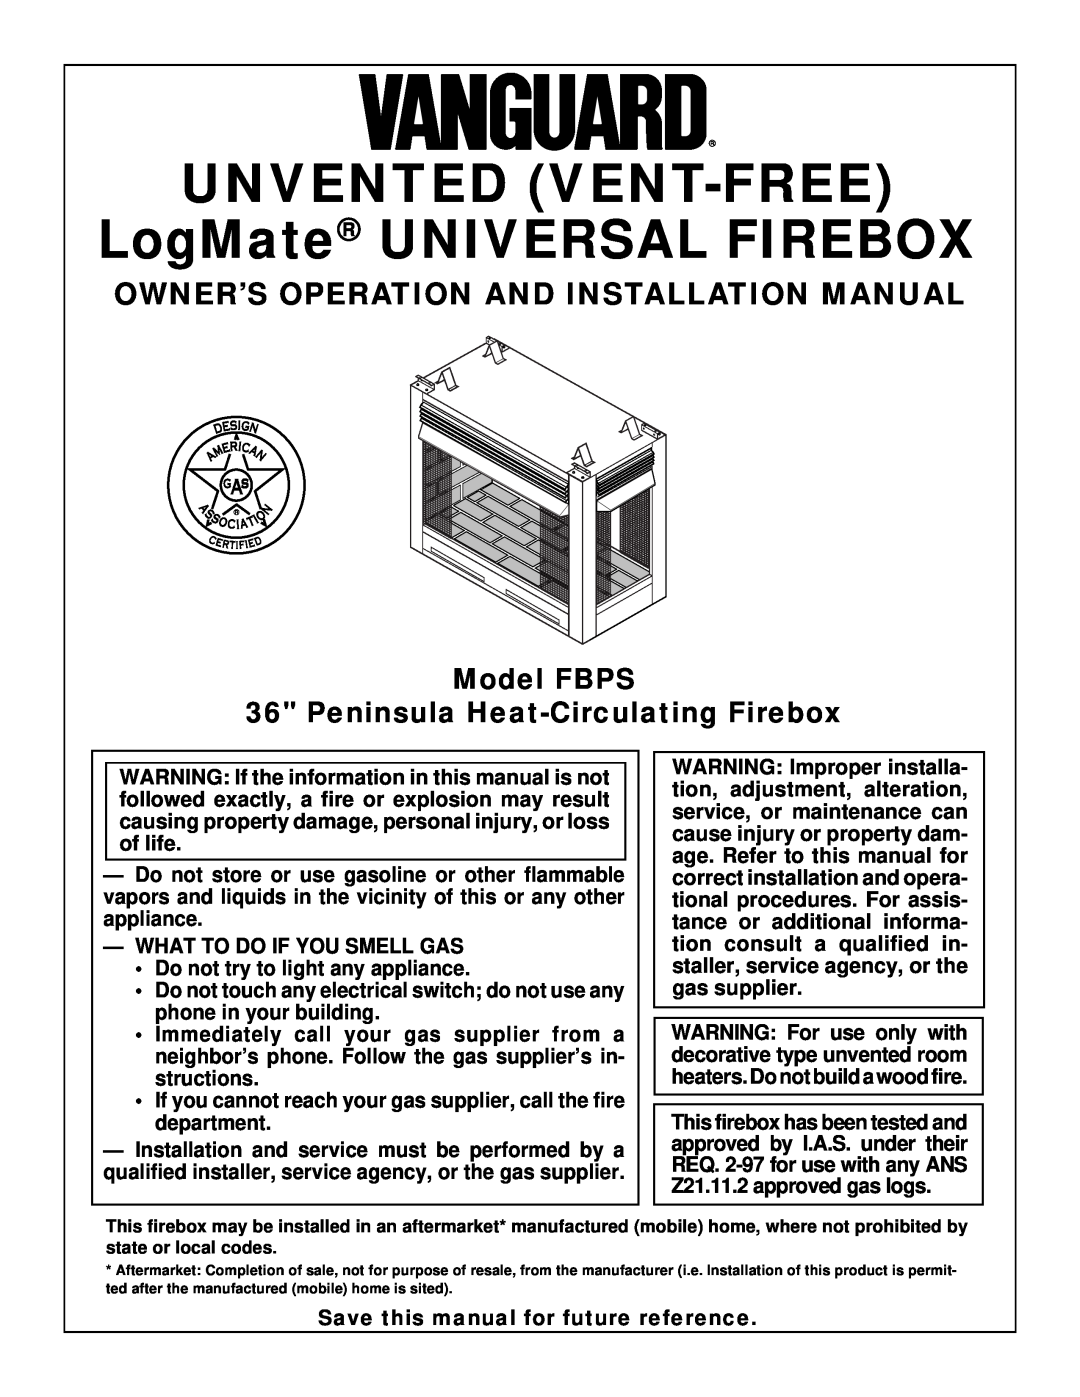 Desa installation manual Model FBPS 36 Peninsula Heat-CirculatingFirebox, UNVENTED VENT-FREE LogMate UNIVERSAL FIREBOX 